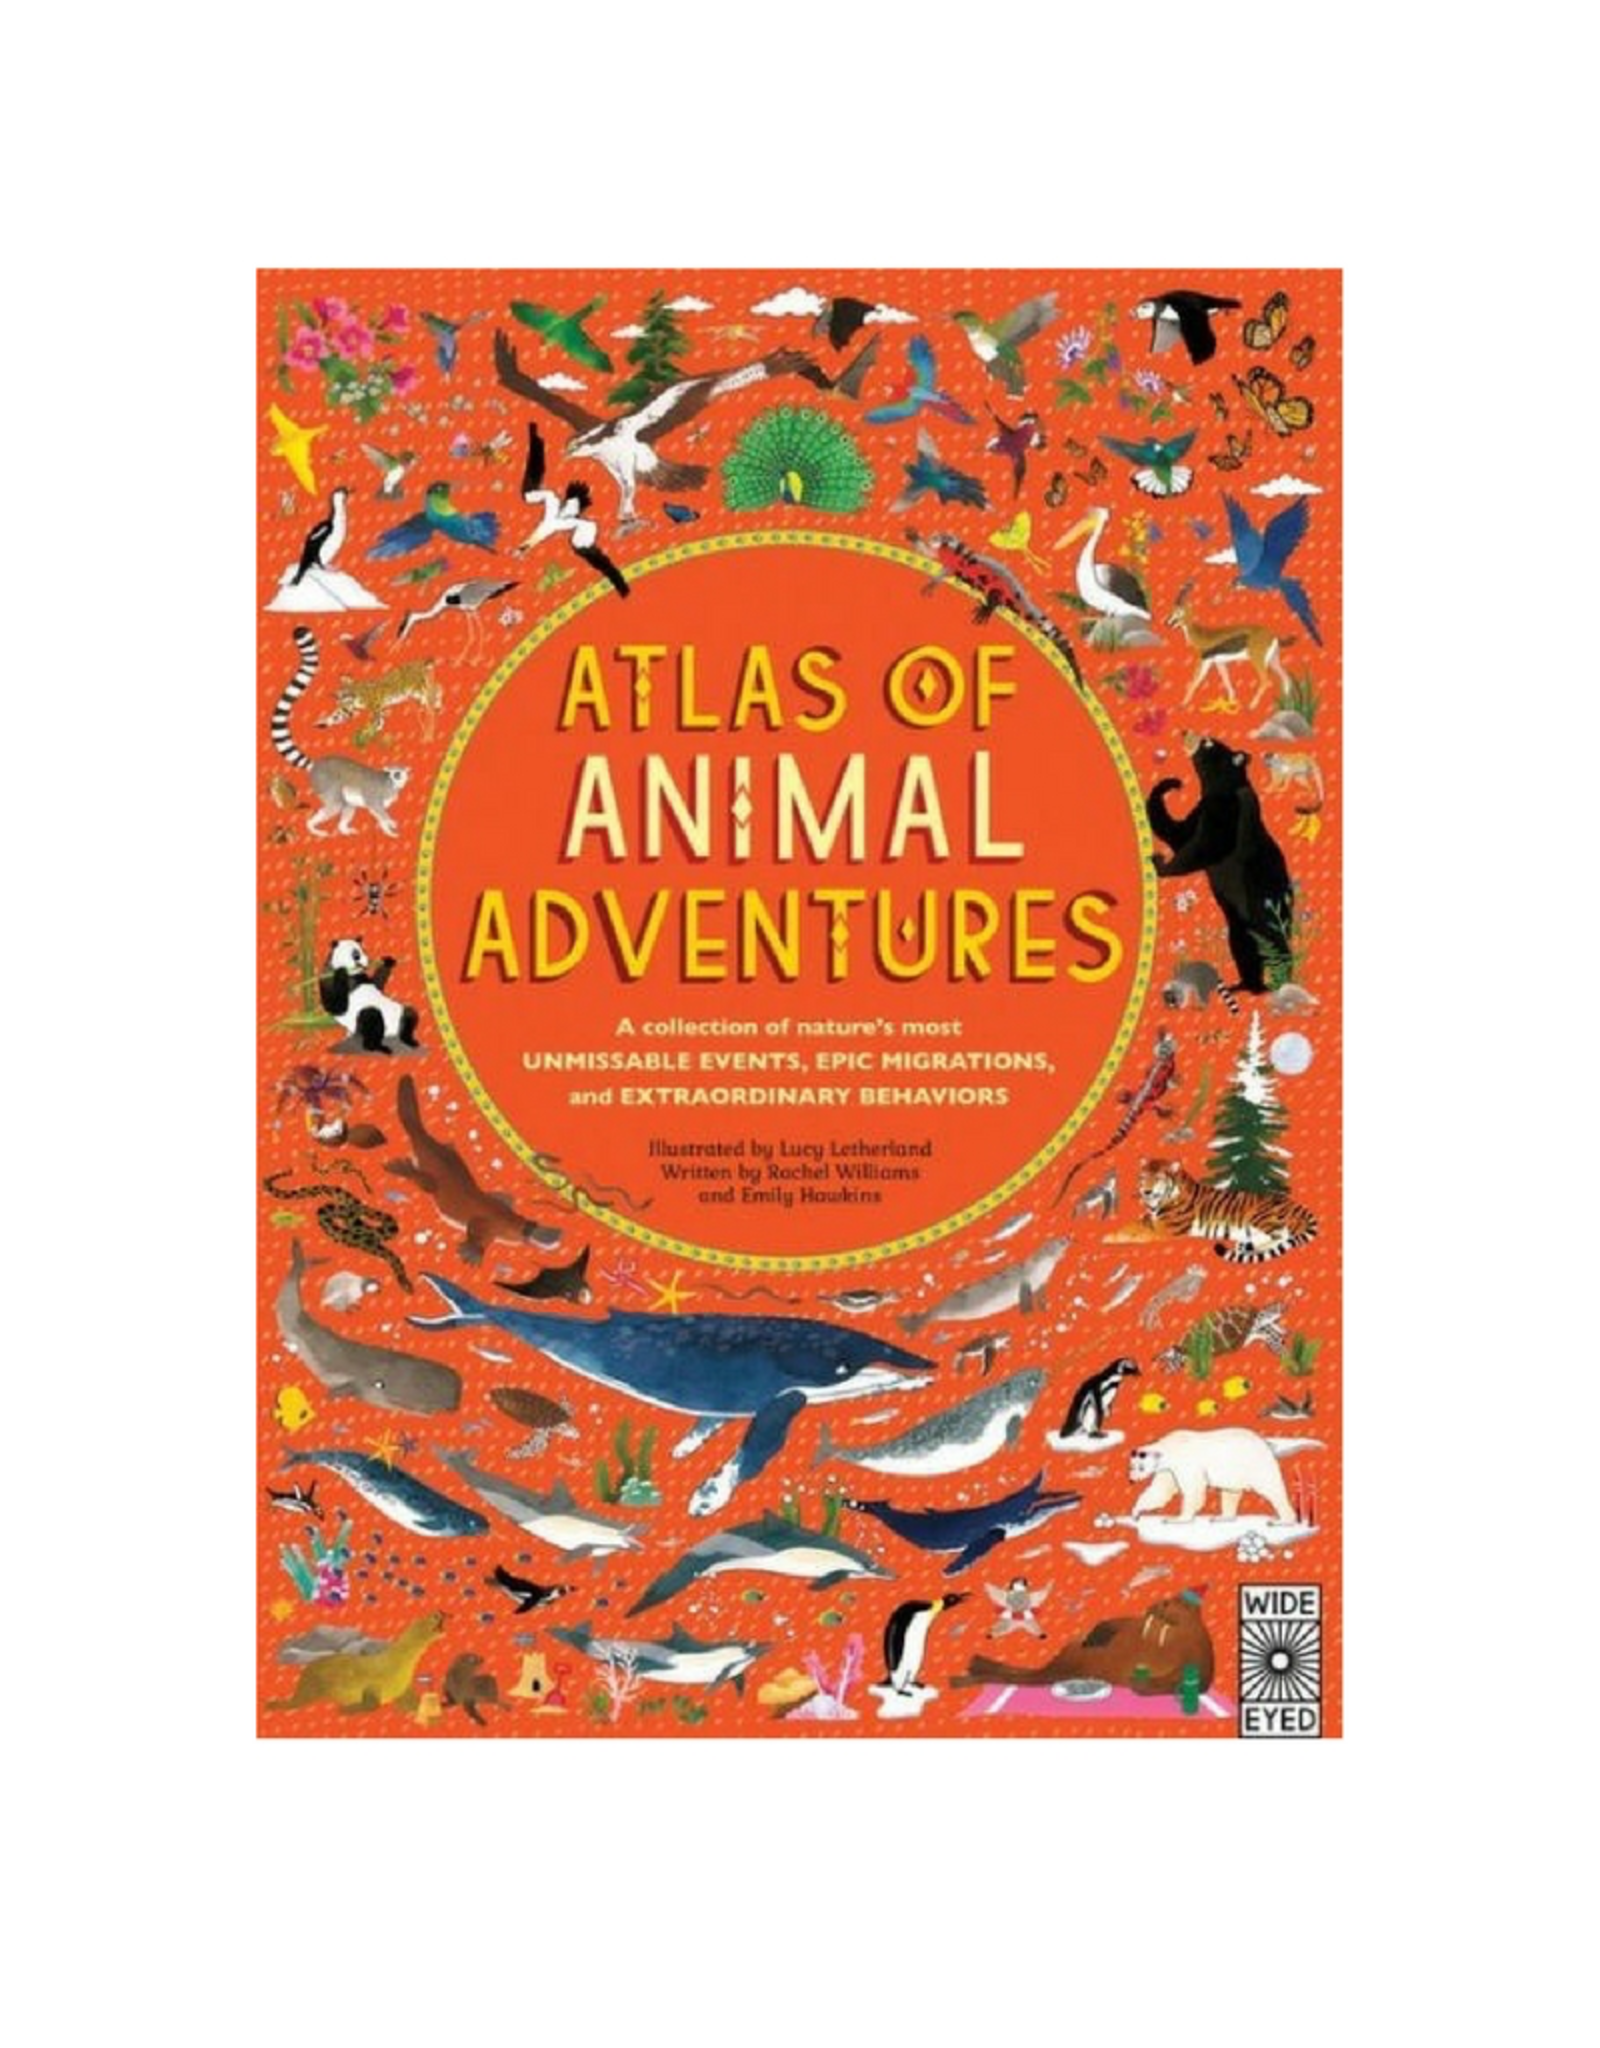 Atlas of Animal Adventures by Rachel Williams and Emily Hawkins